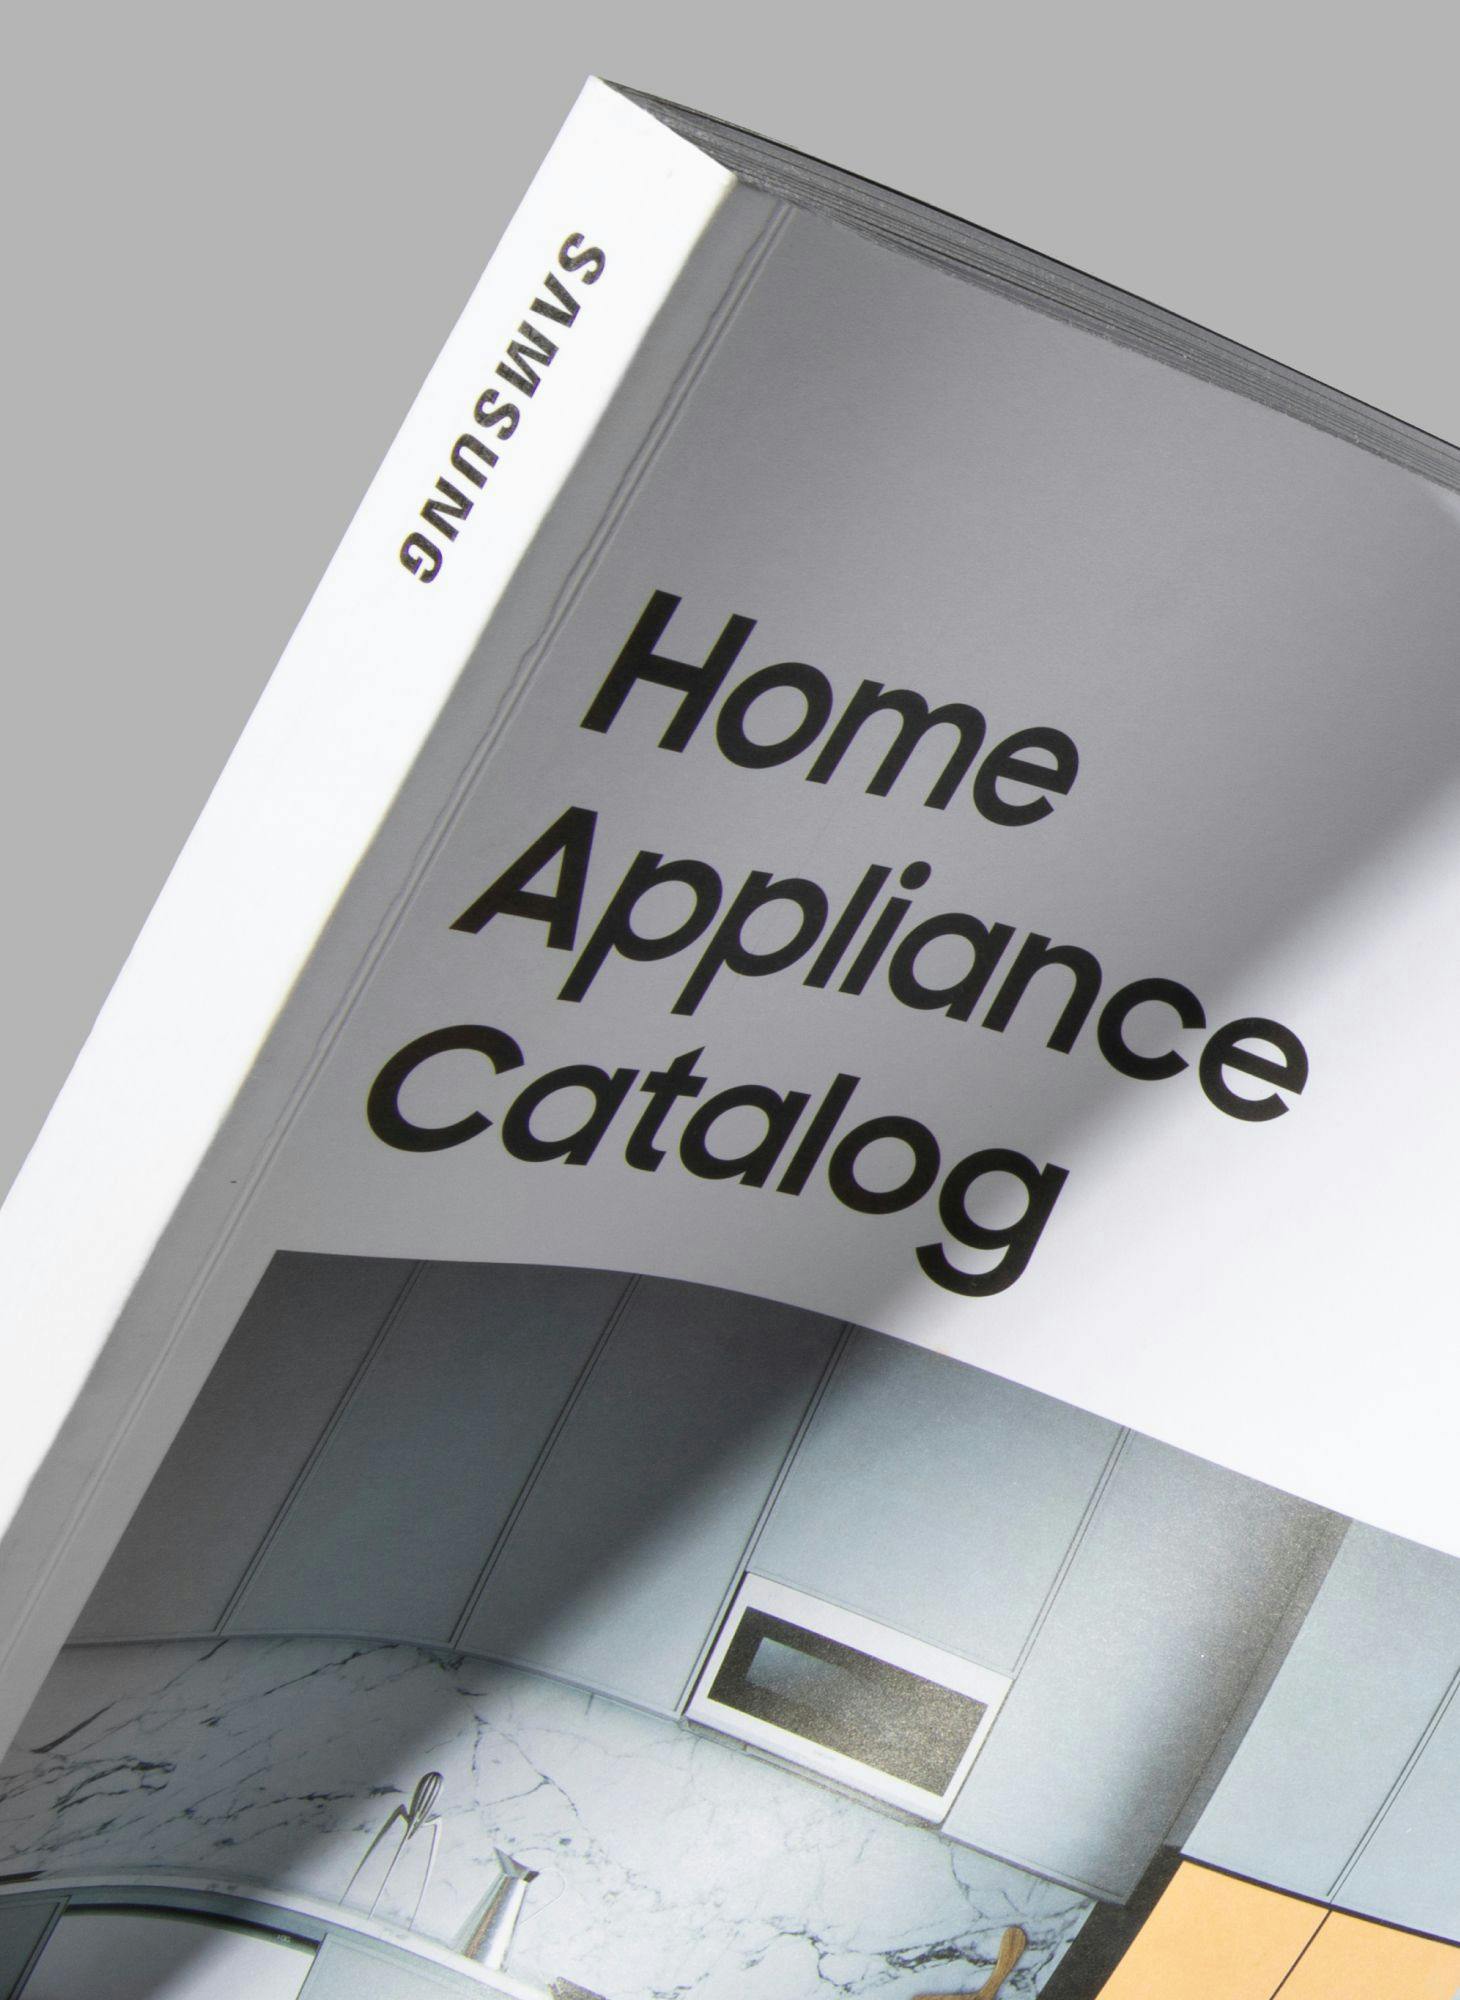 Samsung Builder's Home Appliance Catalog